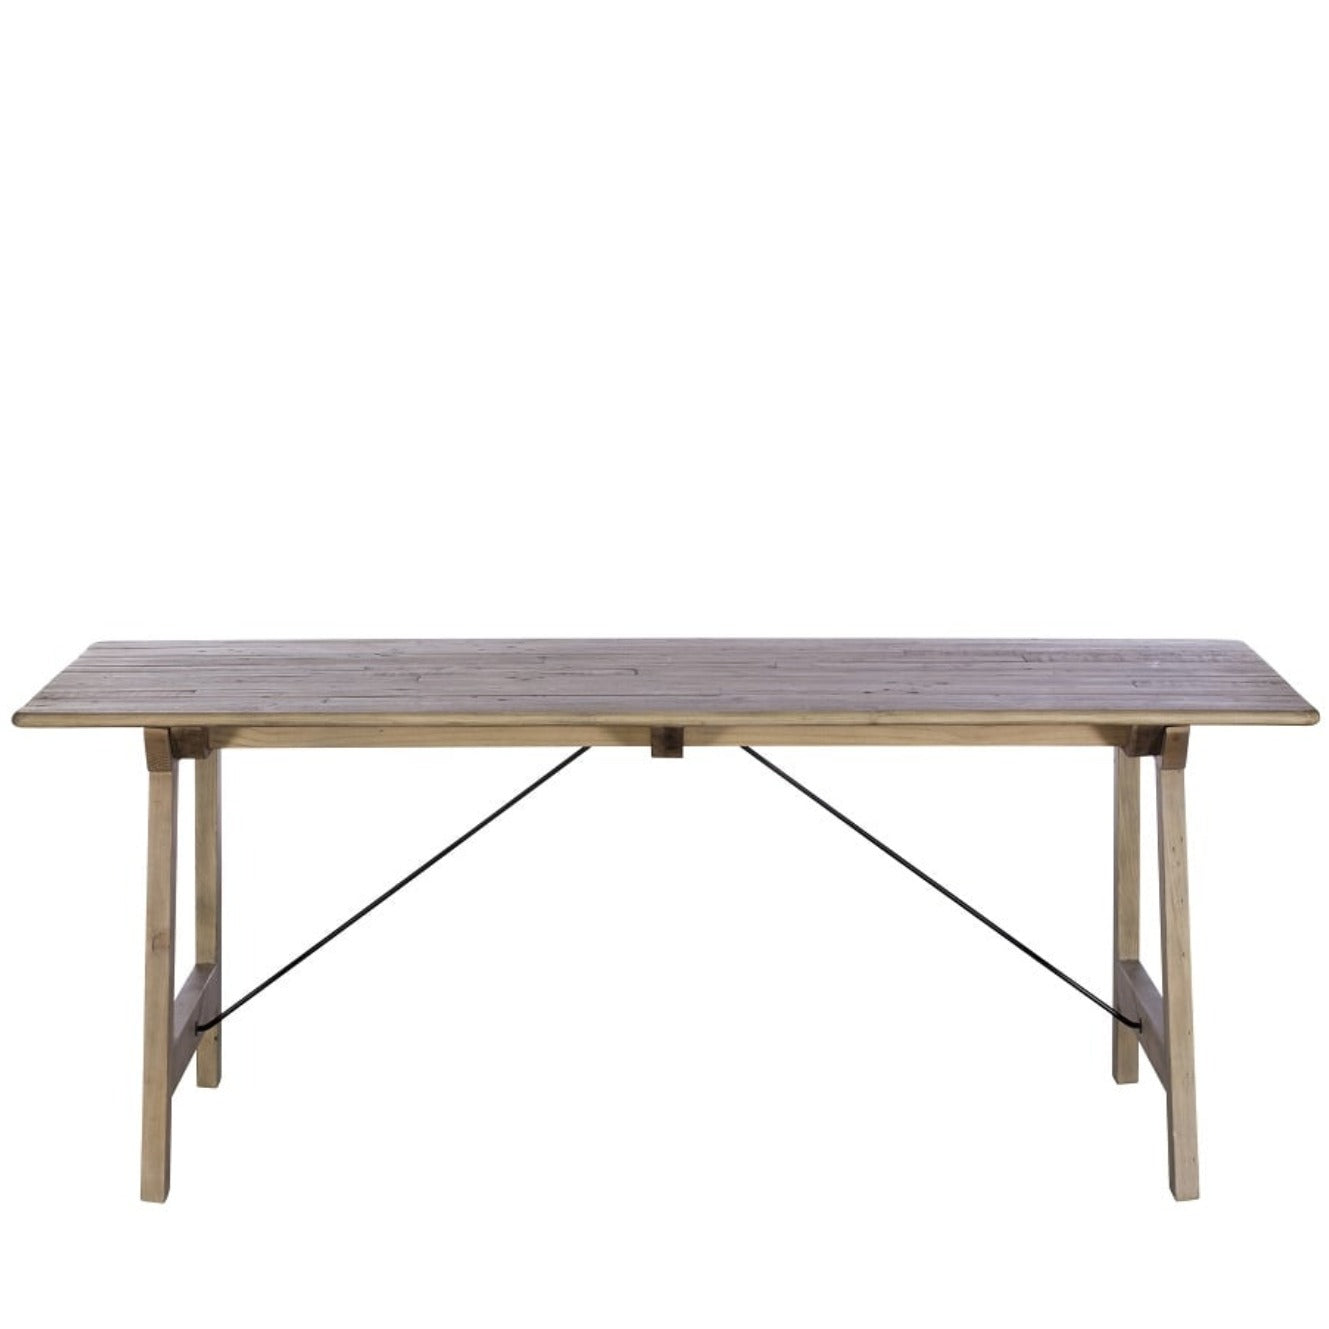 Valetta Fixed Table 200cm